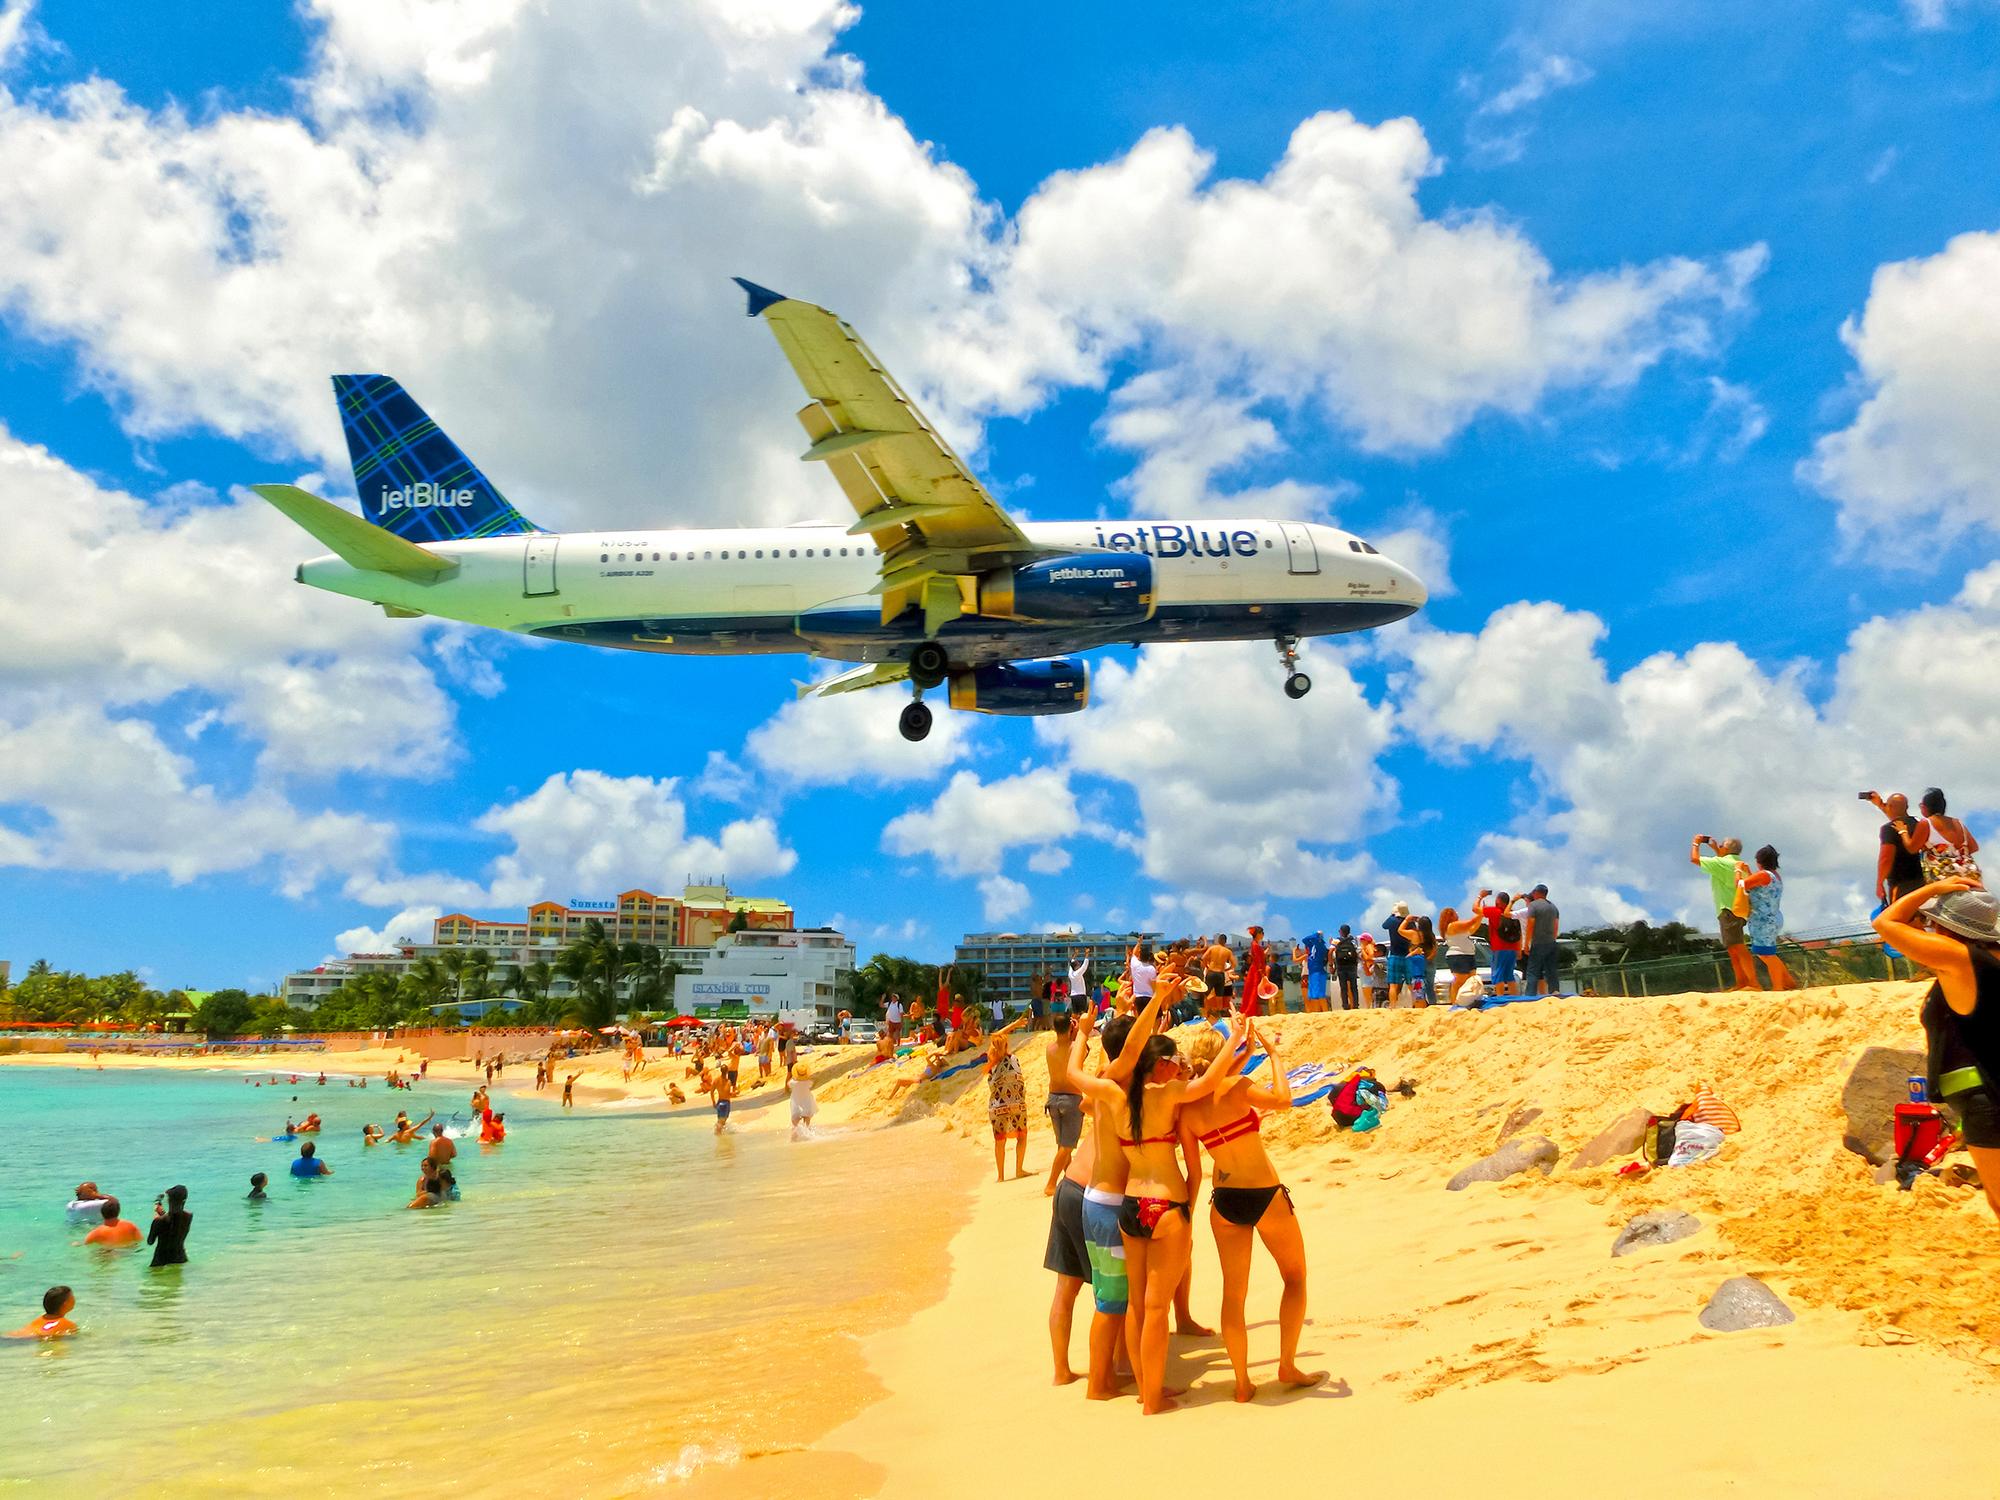 Medzinárodné letisko princeznej Juliany v krajine Sint Maarten